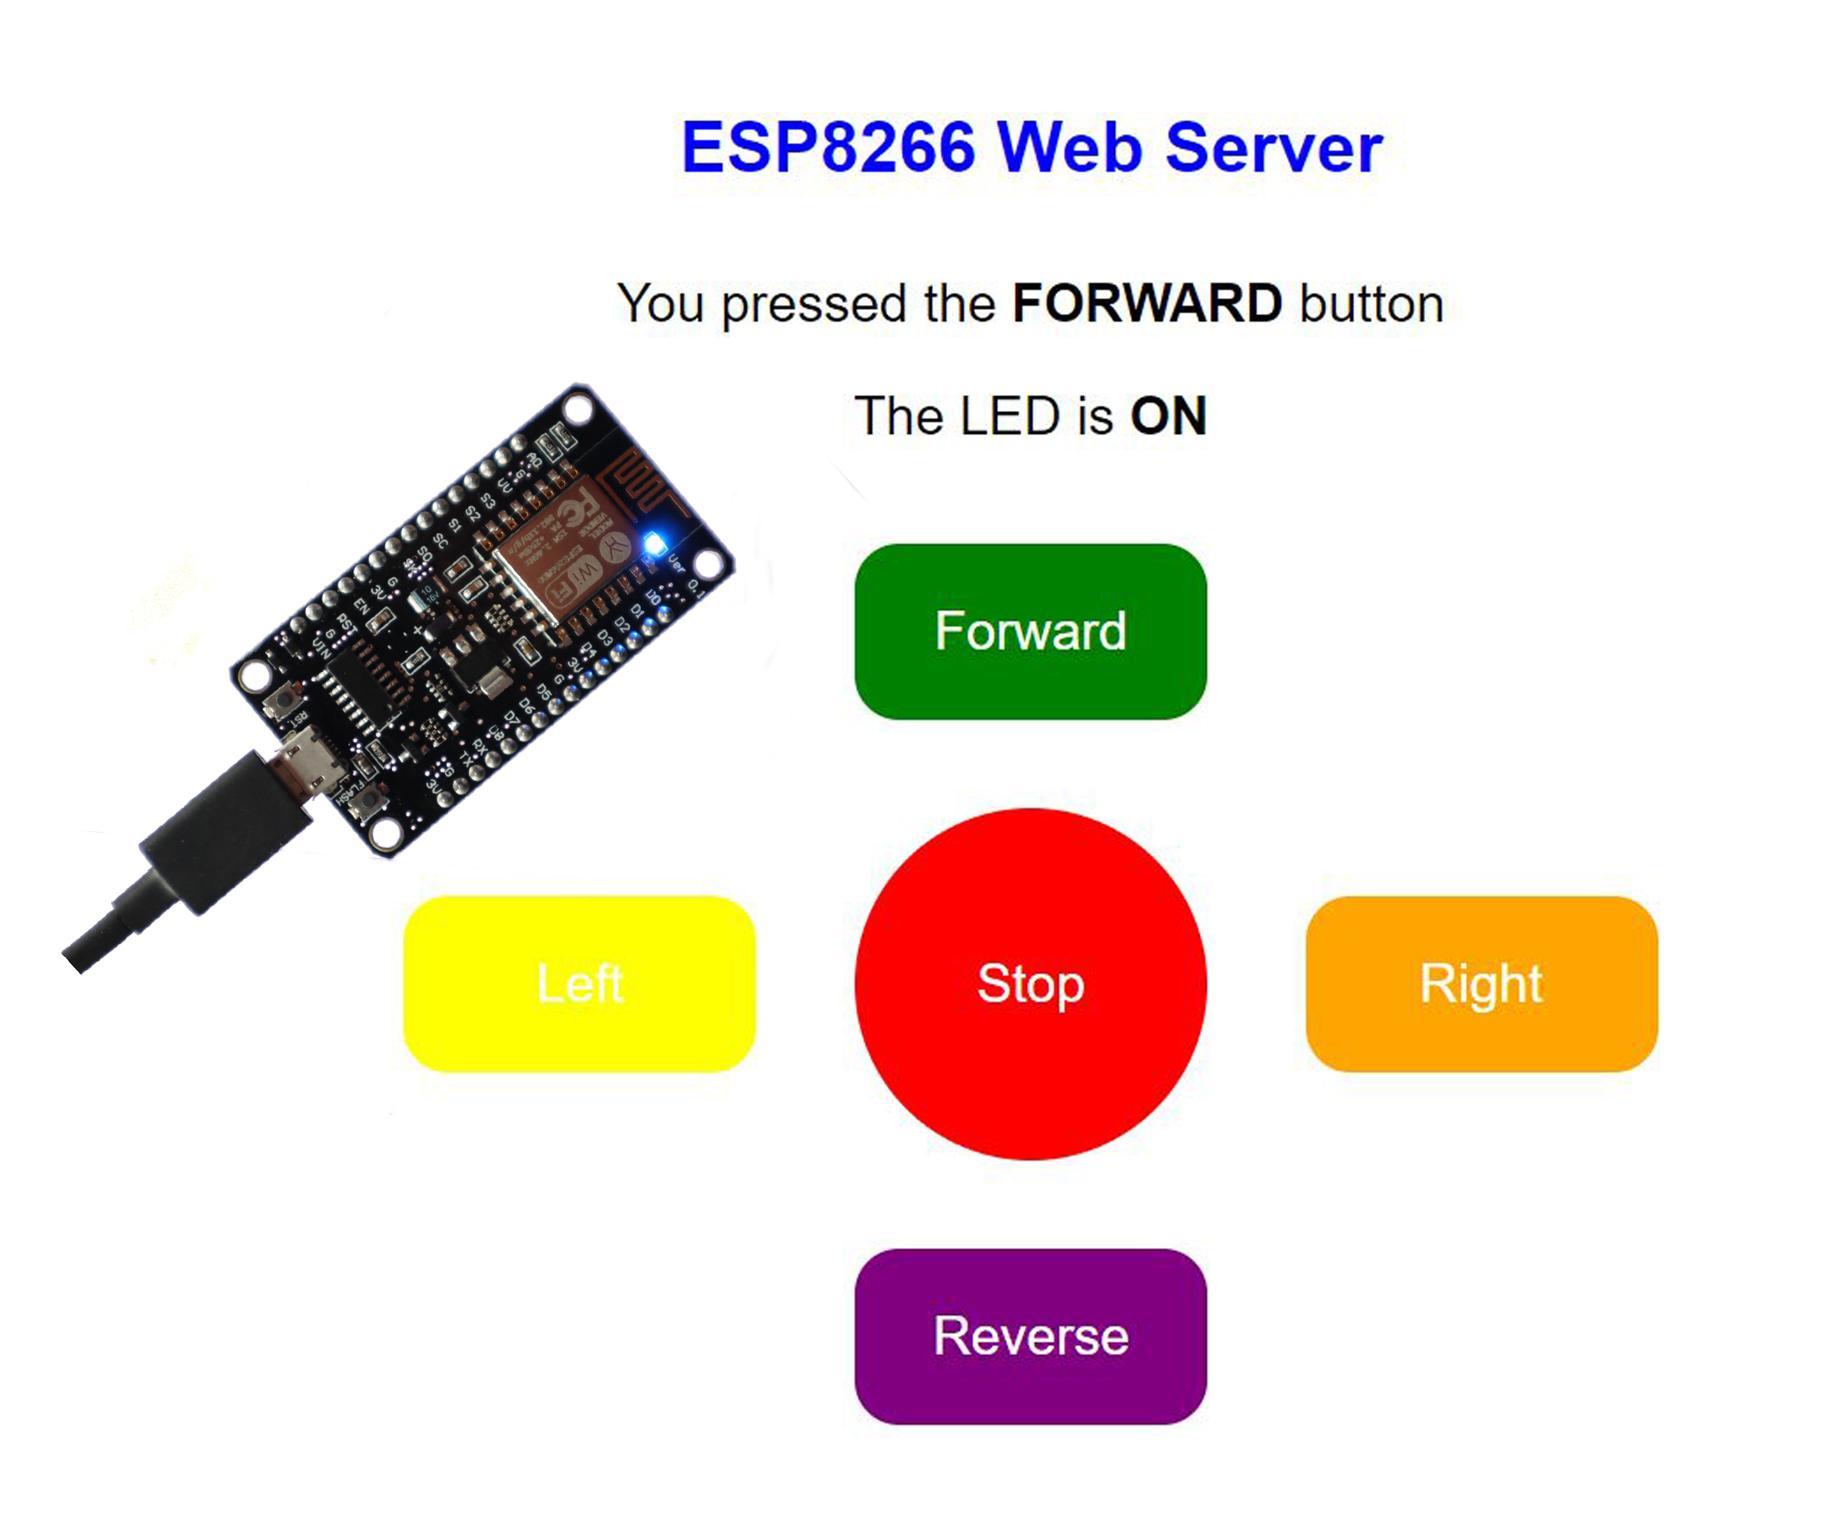 Remote Control Using an ESP8266 Wireless Module